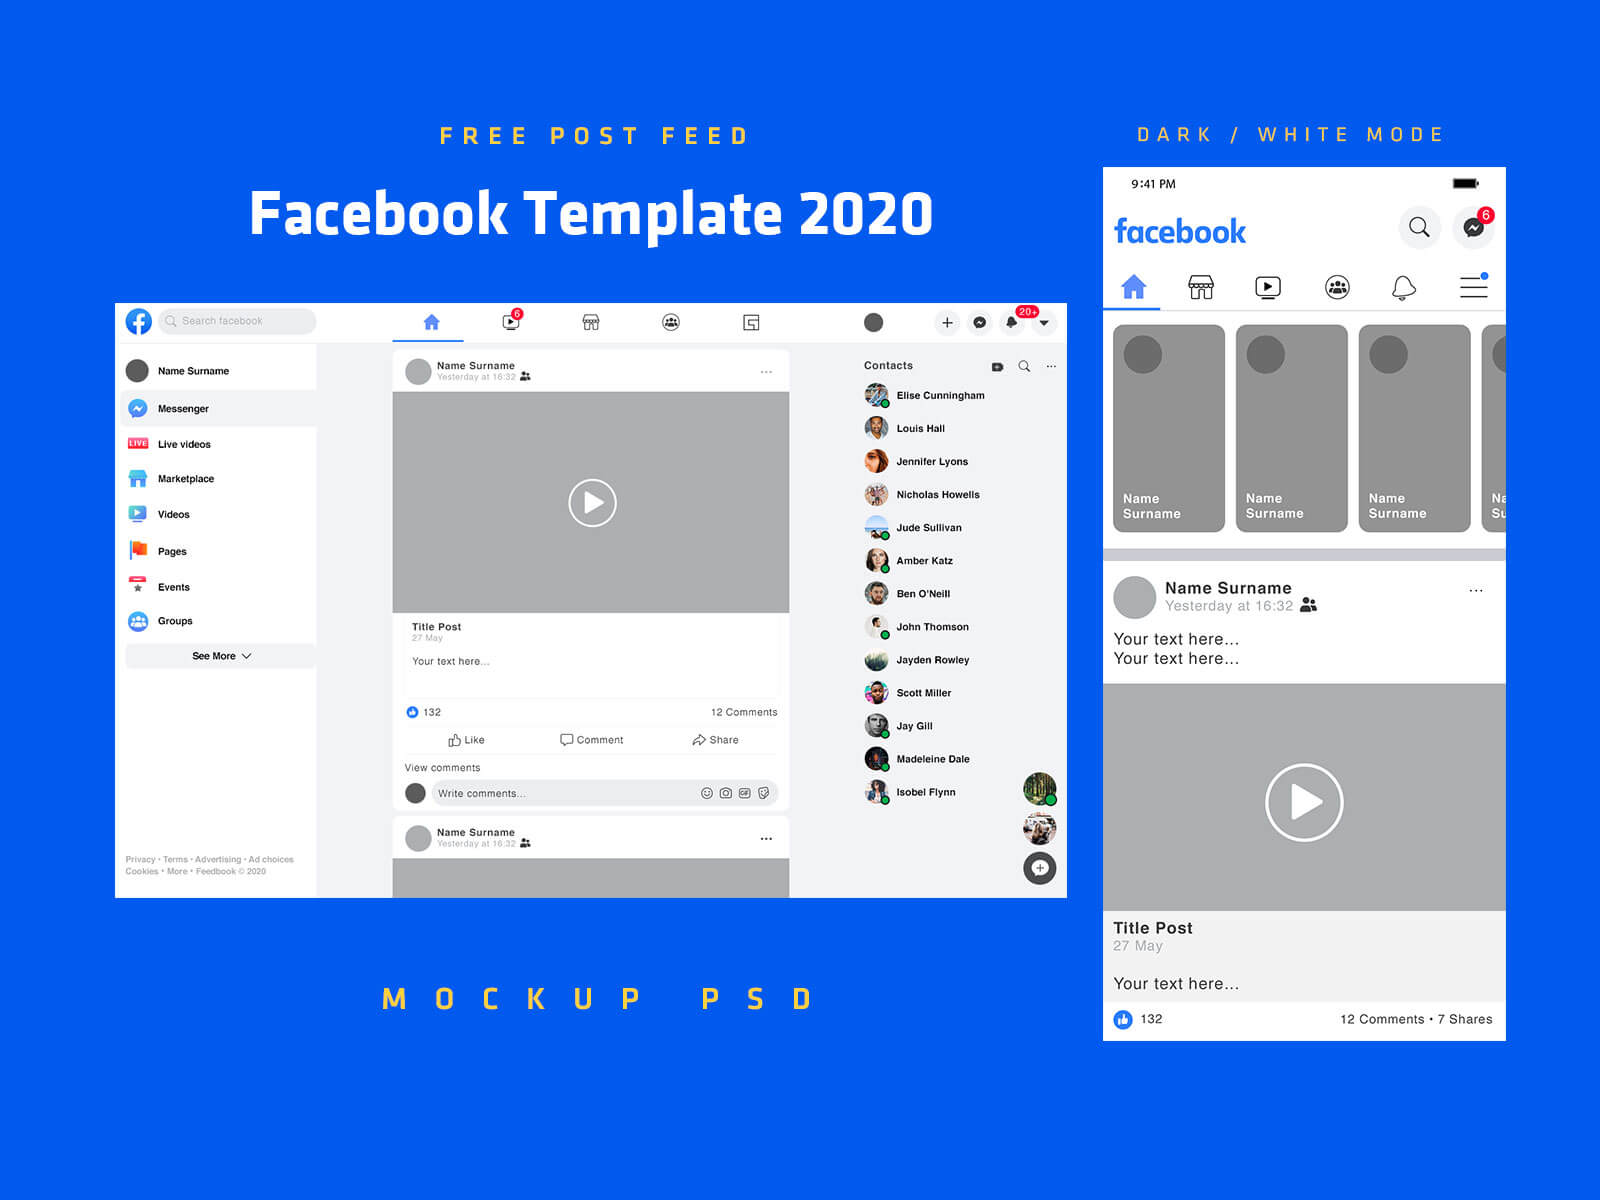 mobile-desktop-facebook-post-feed-template-2020-mockup-set-free-psd-templates